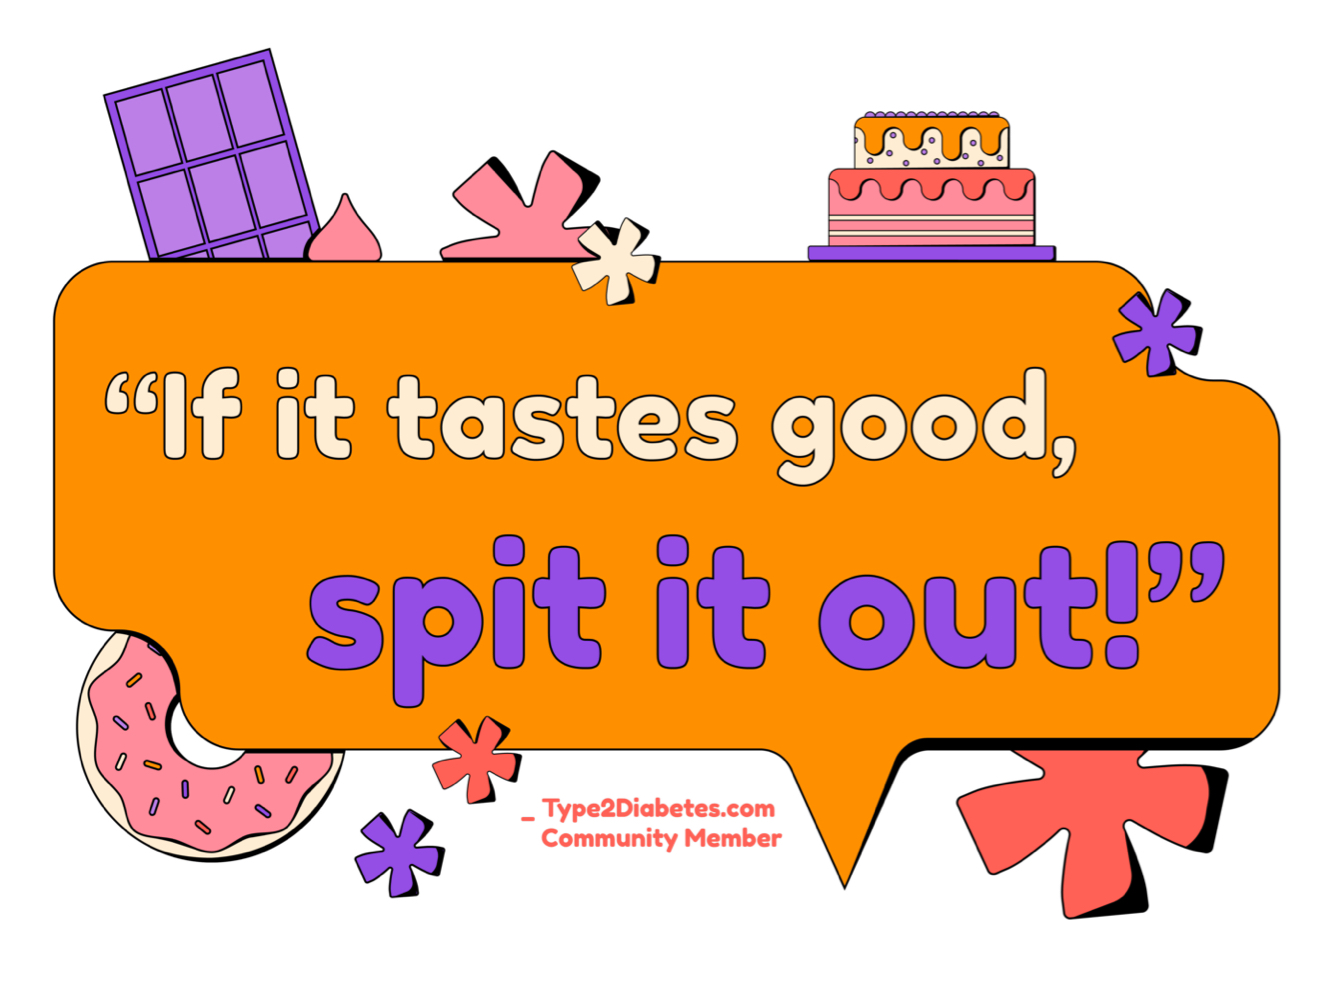 If it tastes good, spit it out! - type2diabetes.com Community Member